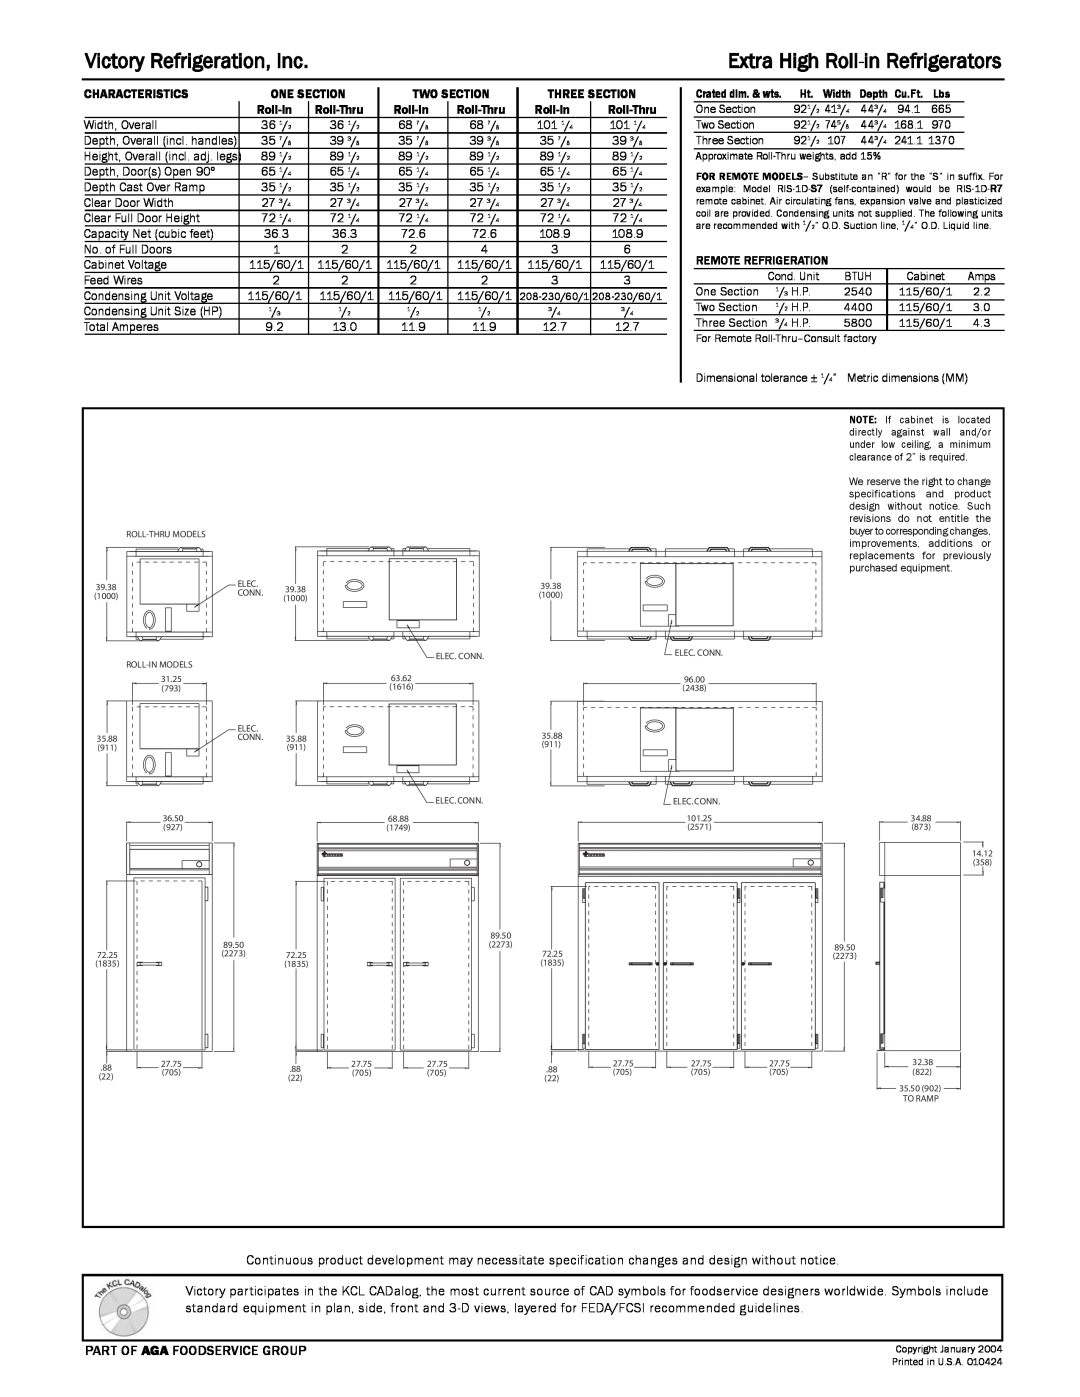 Victory Refrigeration RISA-3D-S7-XH, RISA-2D-S7-XH Victory Refrigeration, Inc, Extra High Roll-inRefrigerators 